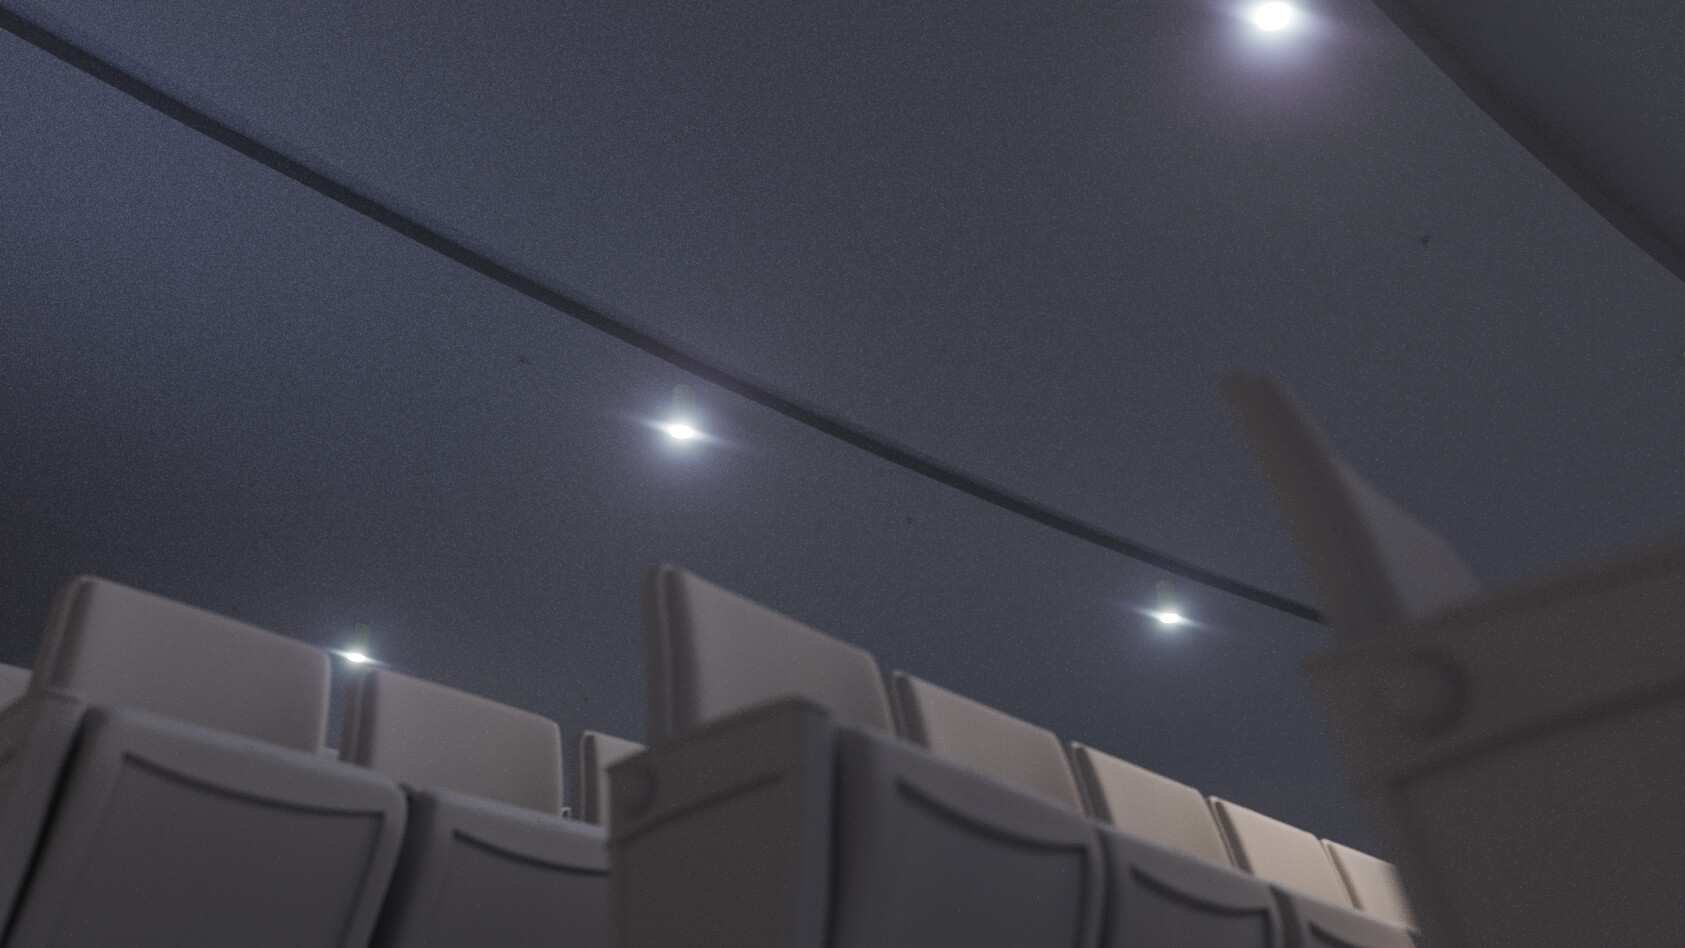 Ceiling Lights Modeled for 3D Animation